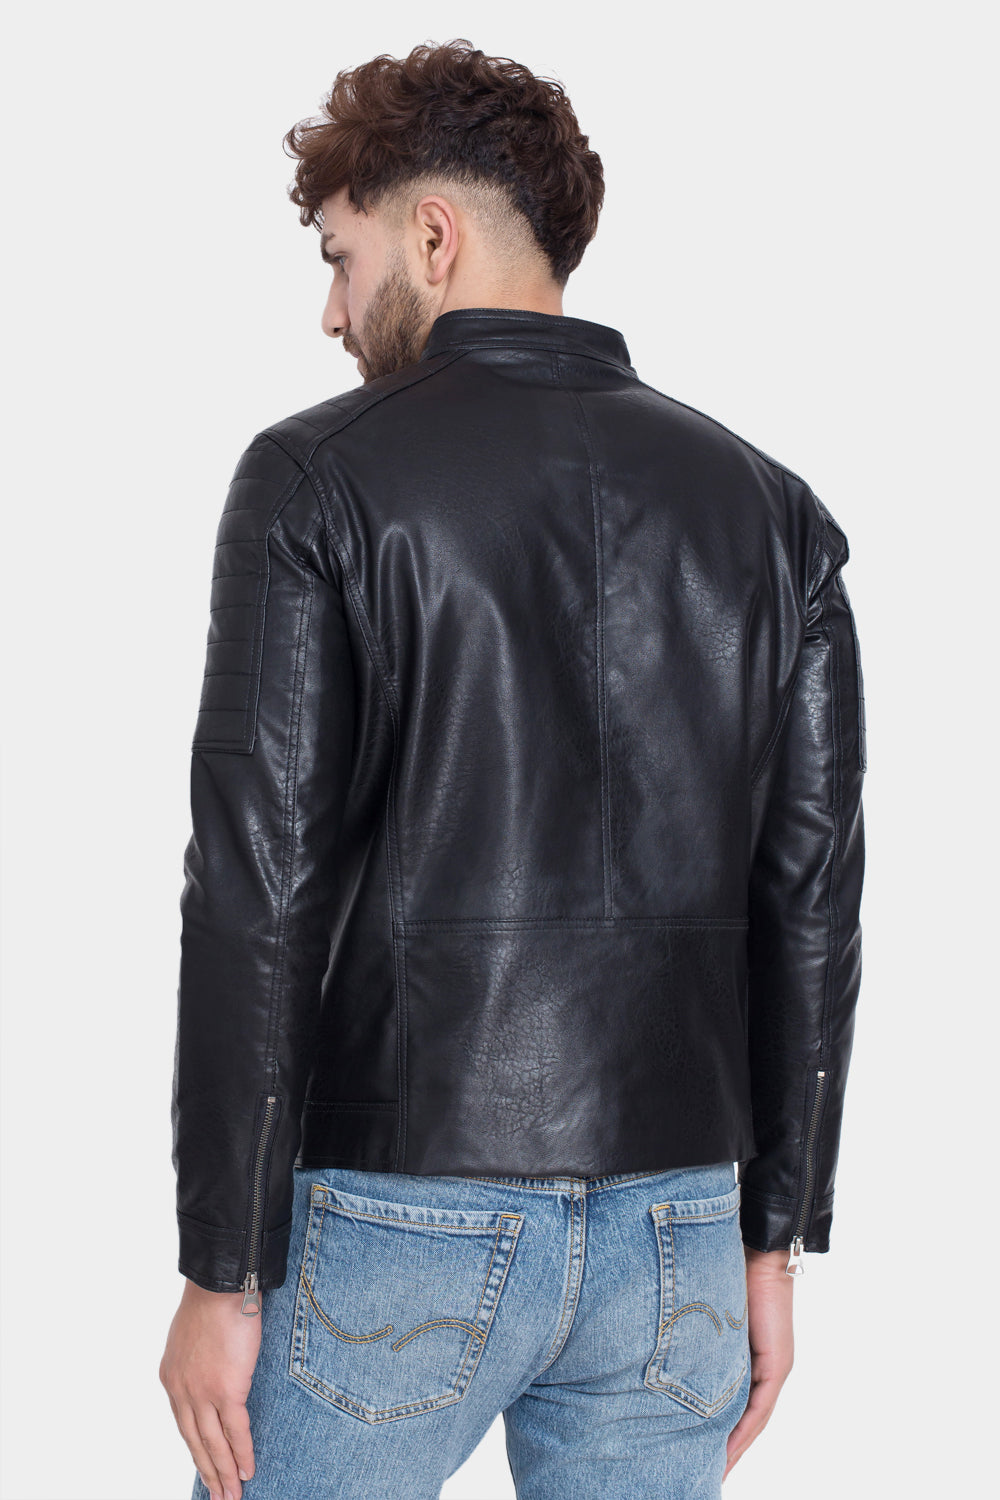 Justanned Mirk Leather Jacket